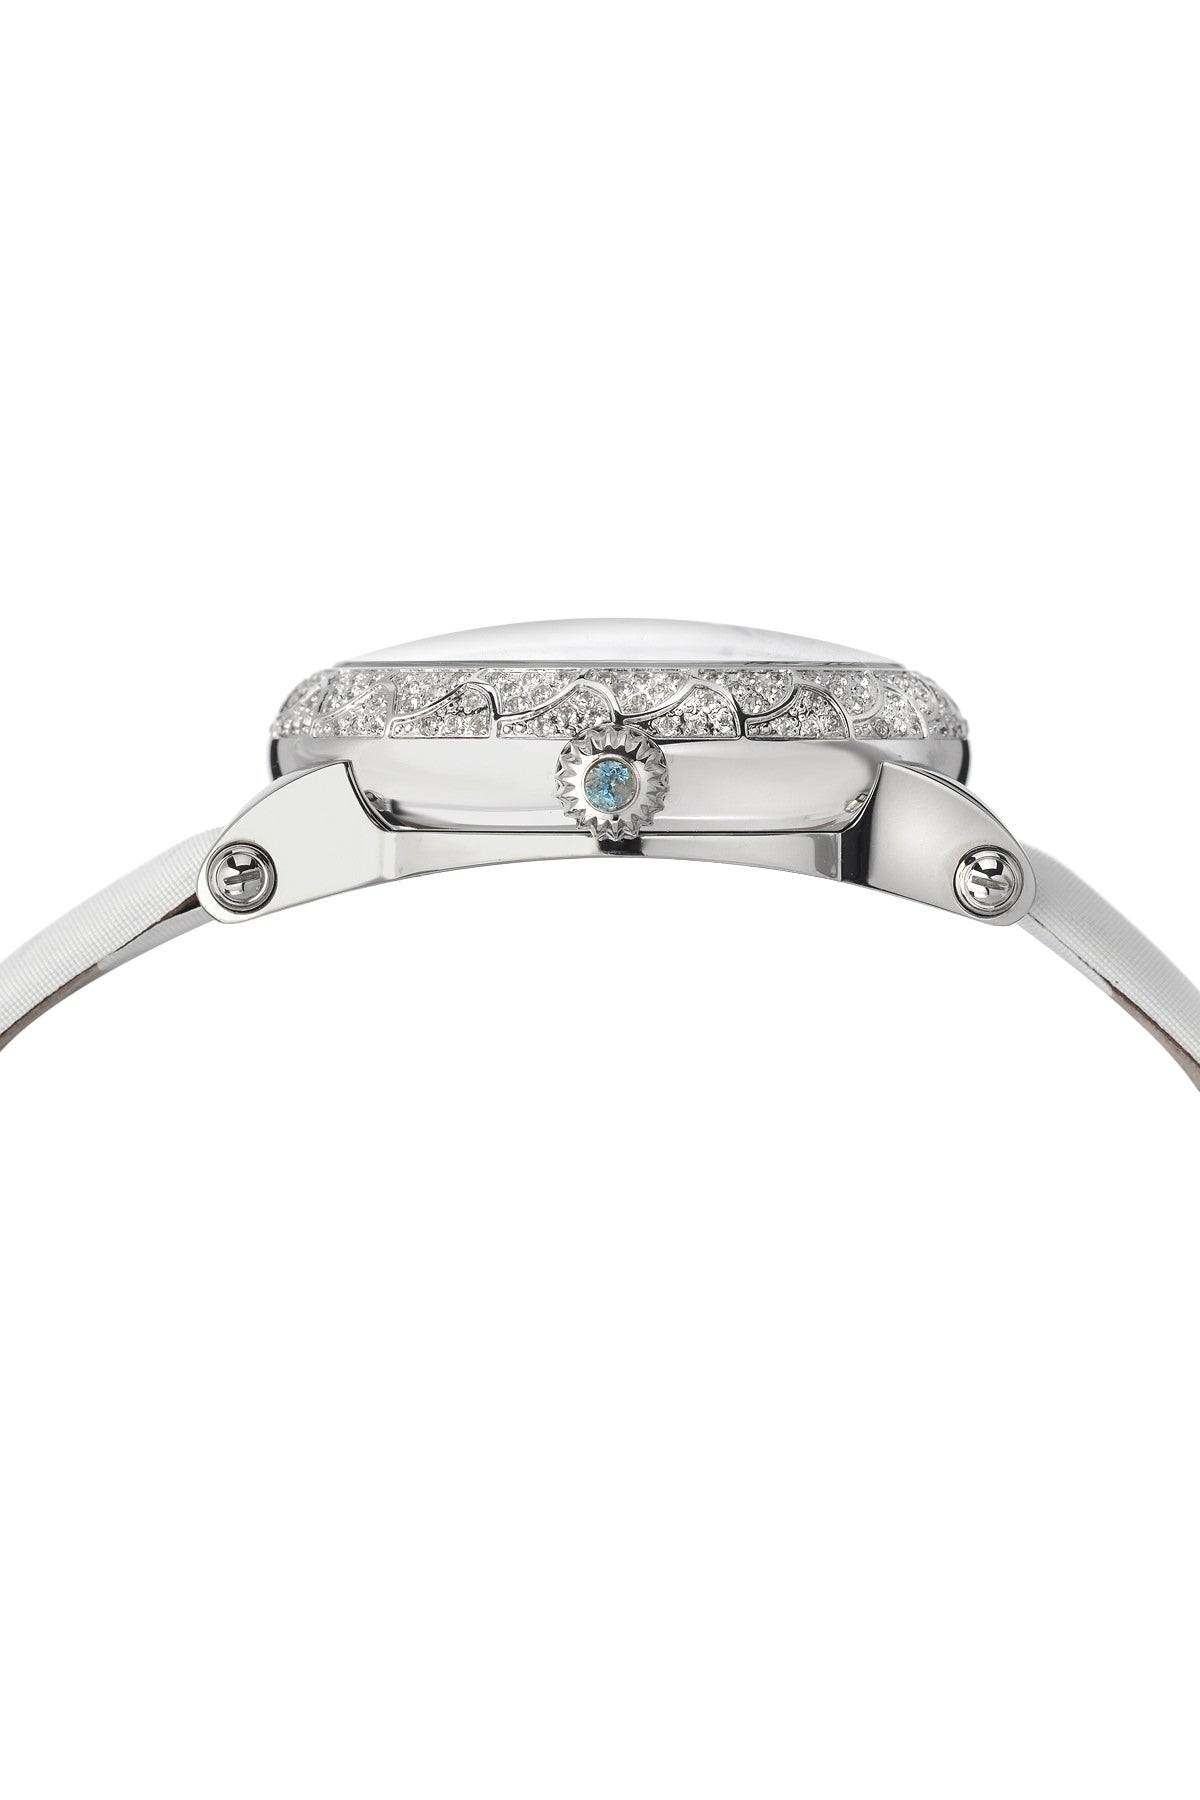 Porsamo Bleu Liza Luxury Automatic Topaz Women's Watch Satin Leather Watch Silver Blue White 692ALIL